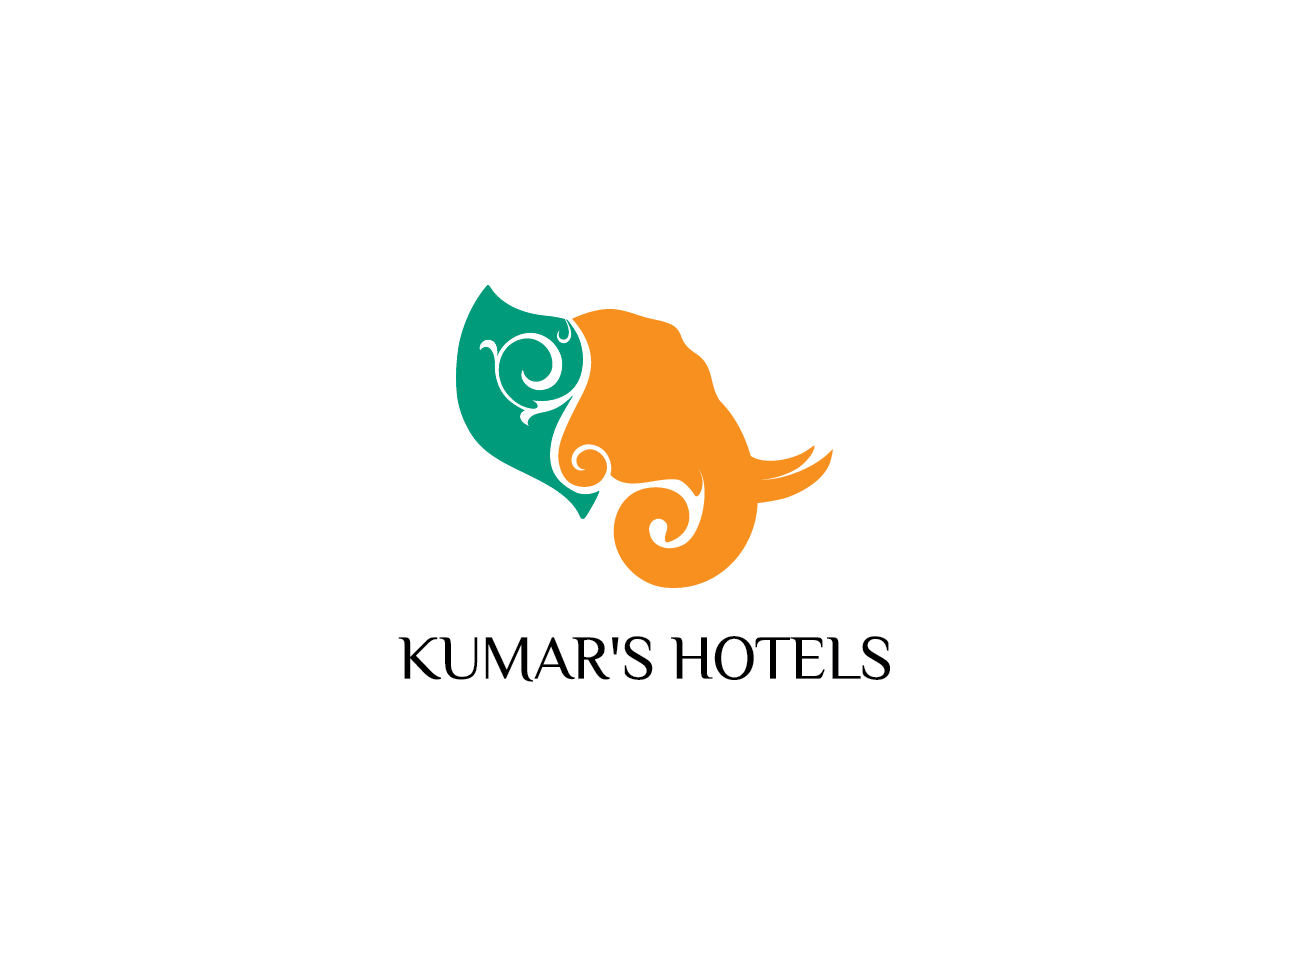 Indian Hotel Logo - Serious, Conservative, Hotel Logo Design for Kumar's Hotels